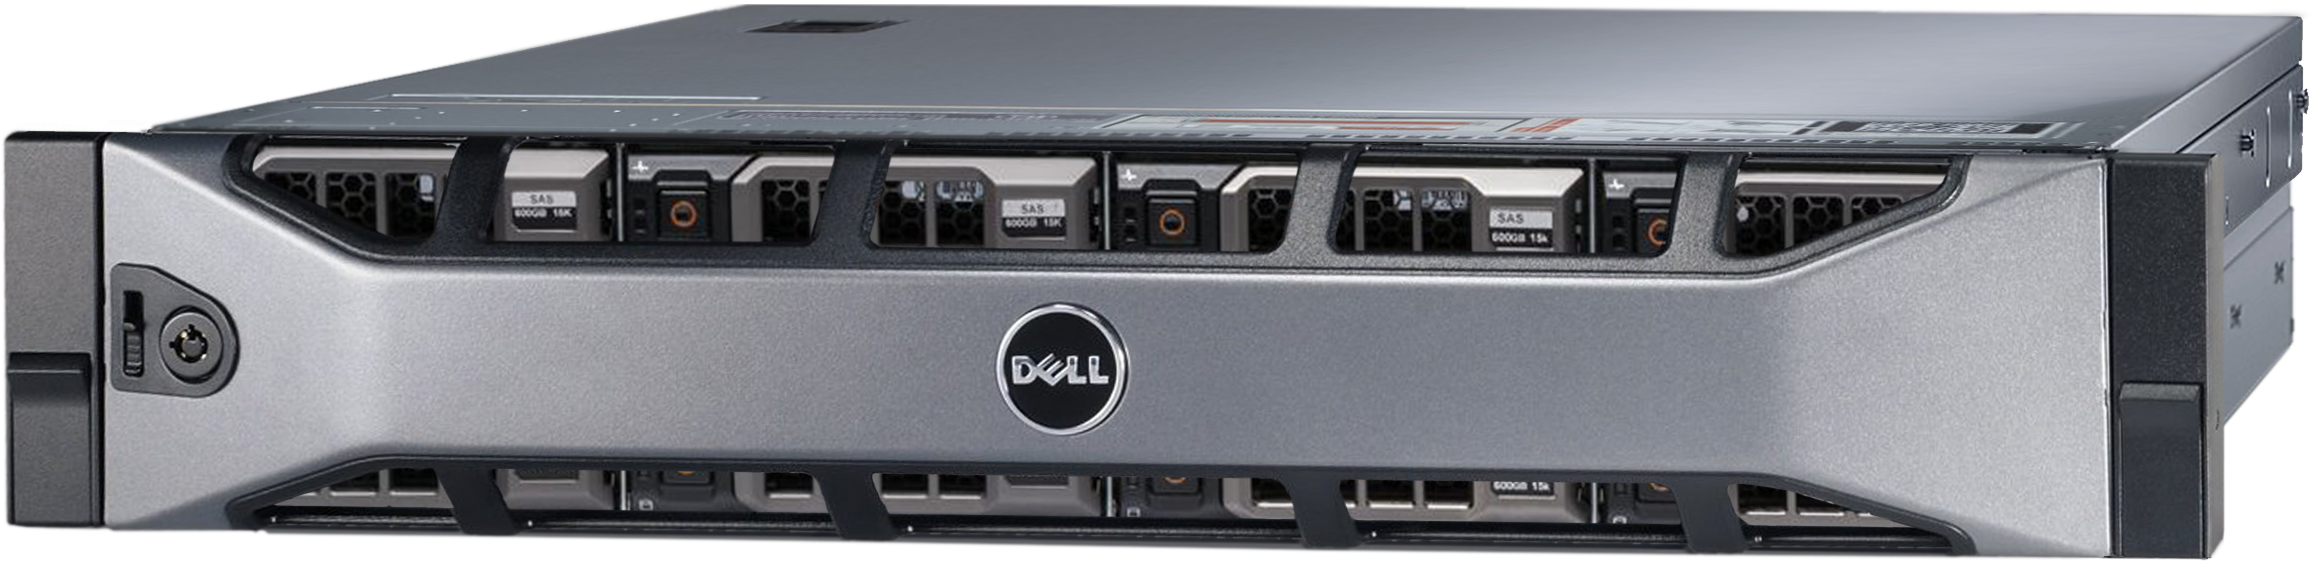 Платформа для аренды Dell PowerEdge R720